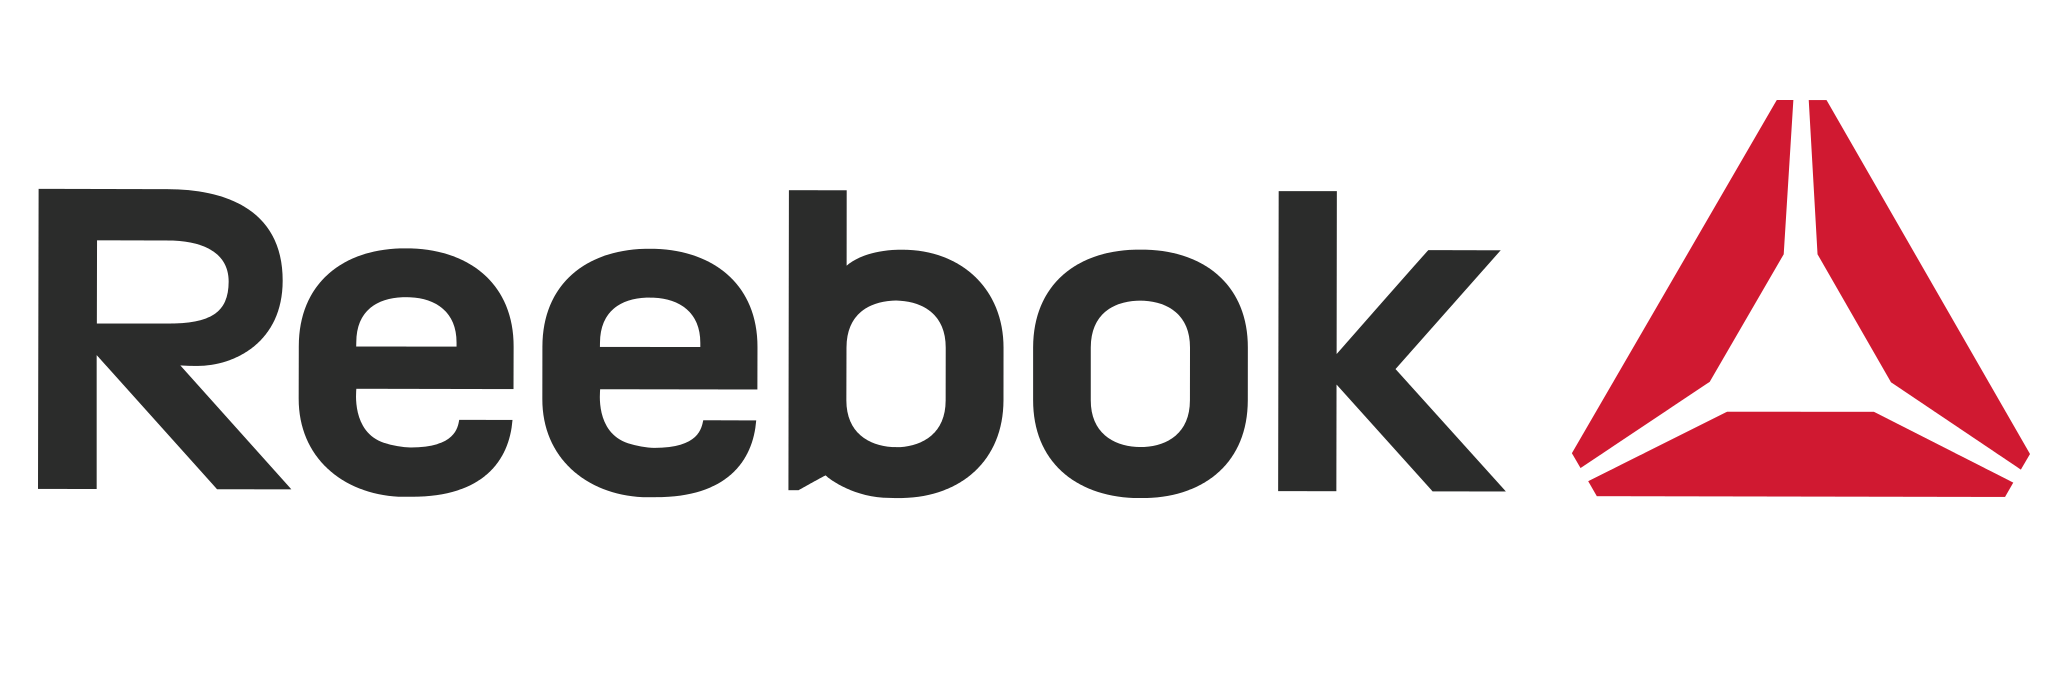 reebok logo transparent 7034